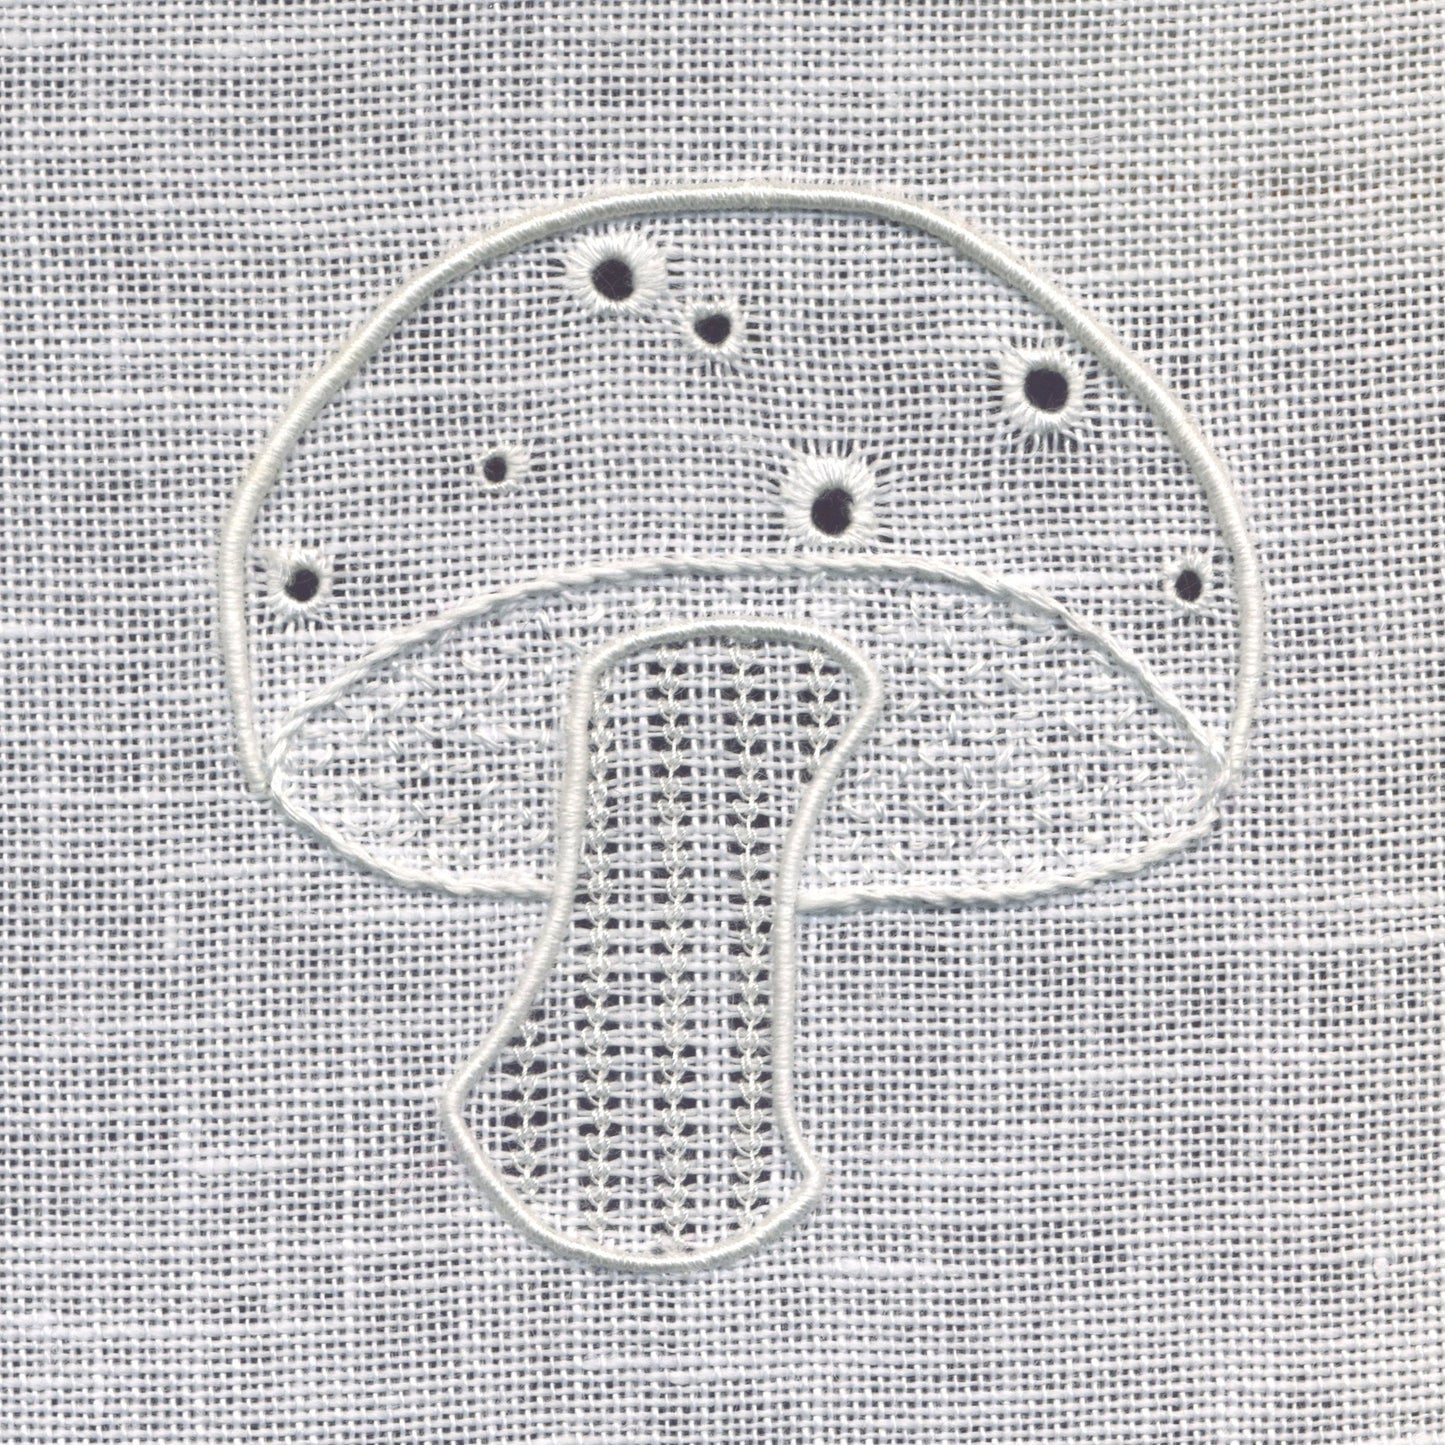 'Toadstool' Whitework Embroidery Kit